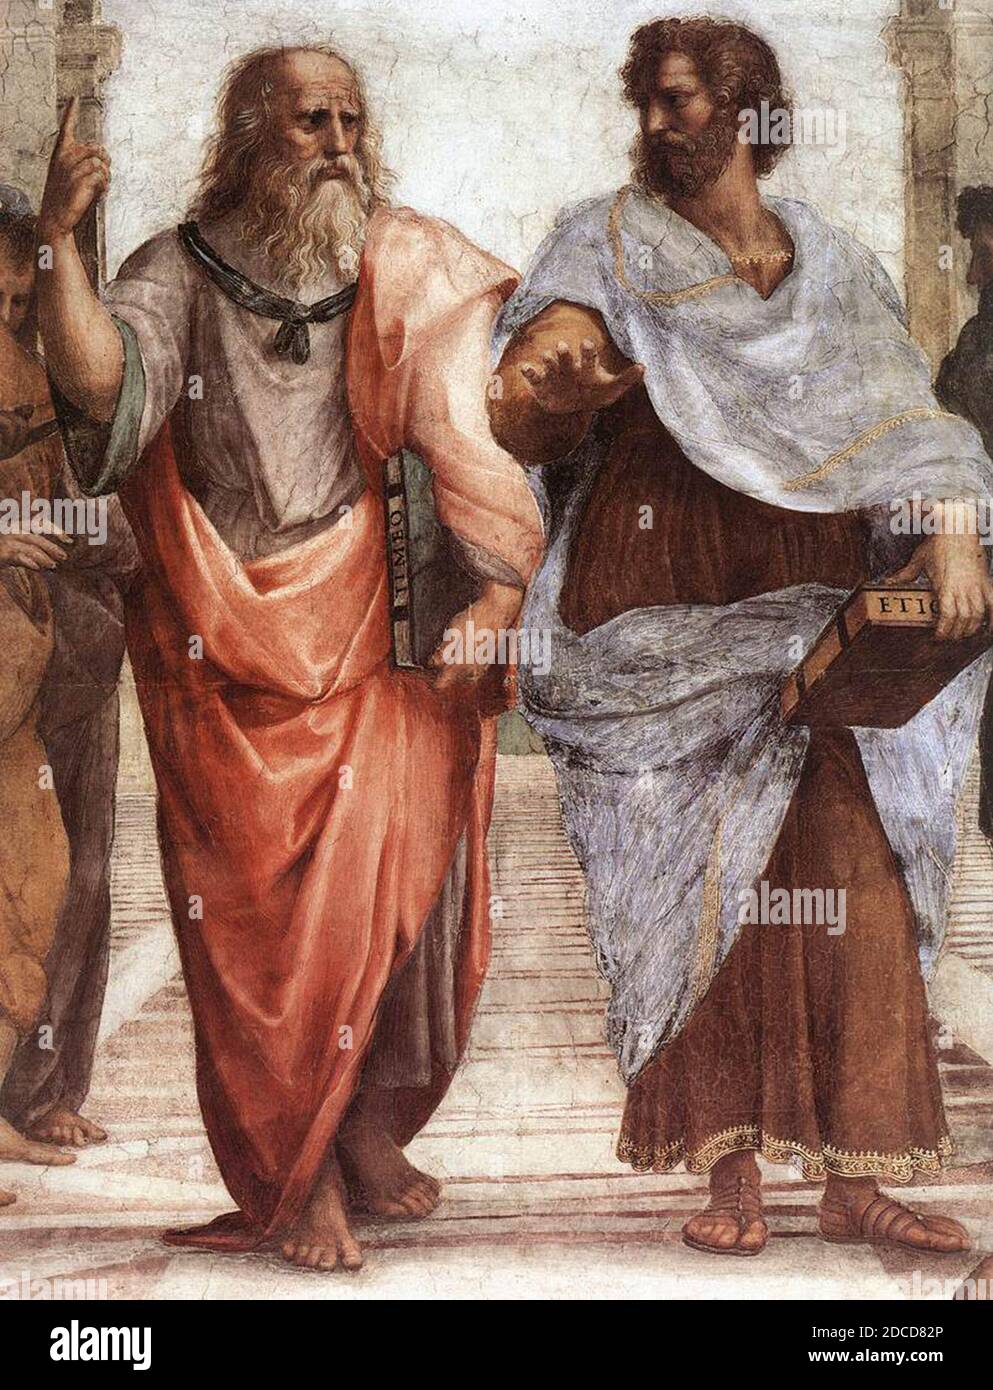 Plato and Aristotle, School of Athens, Raphael Stock Photo